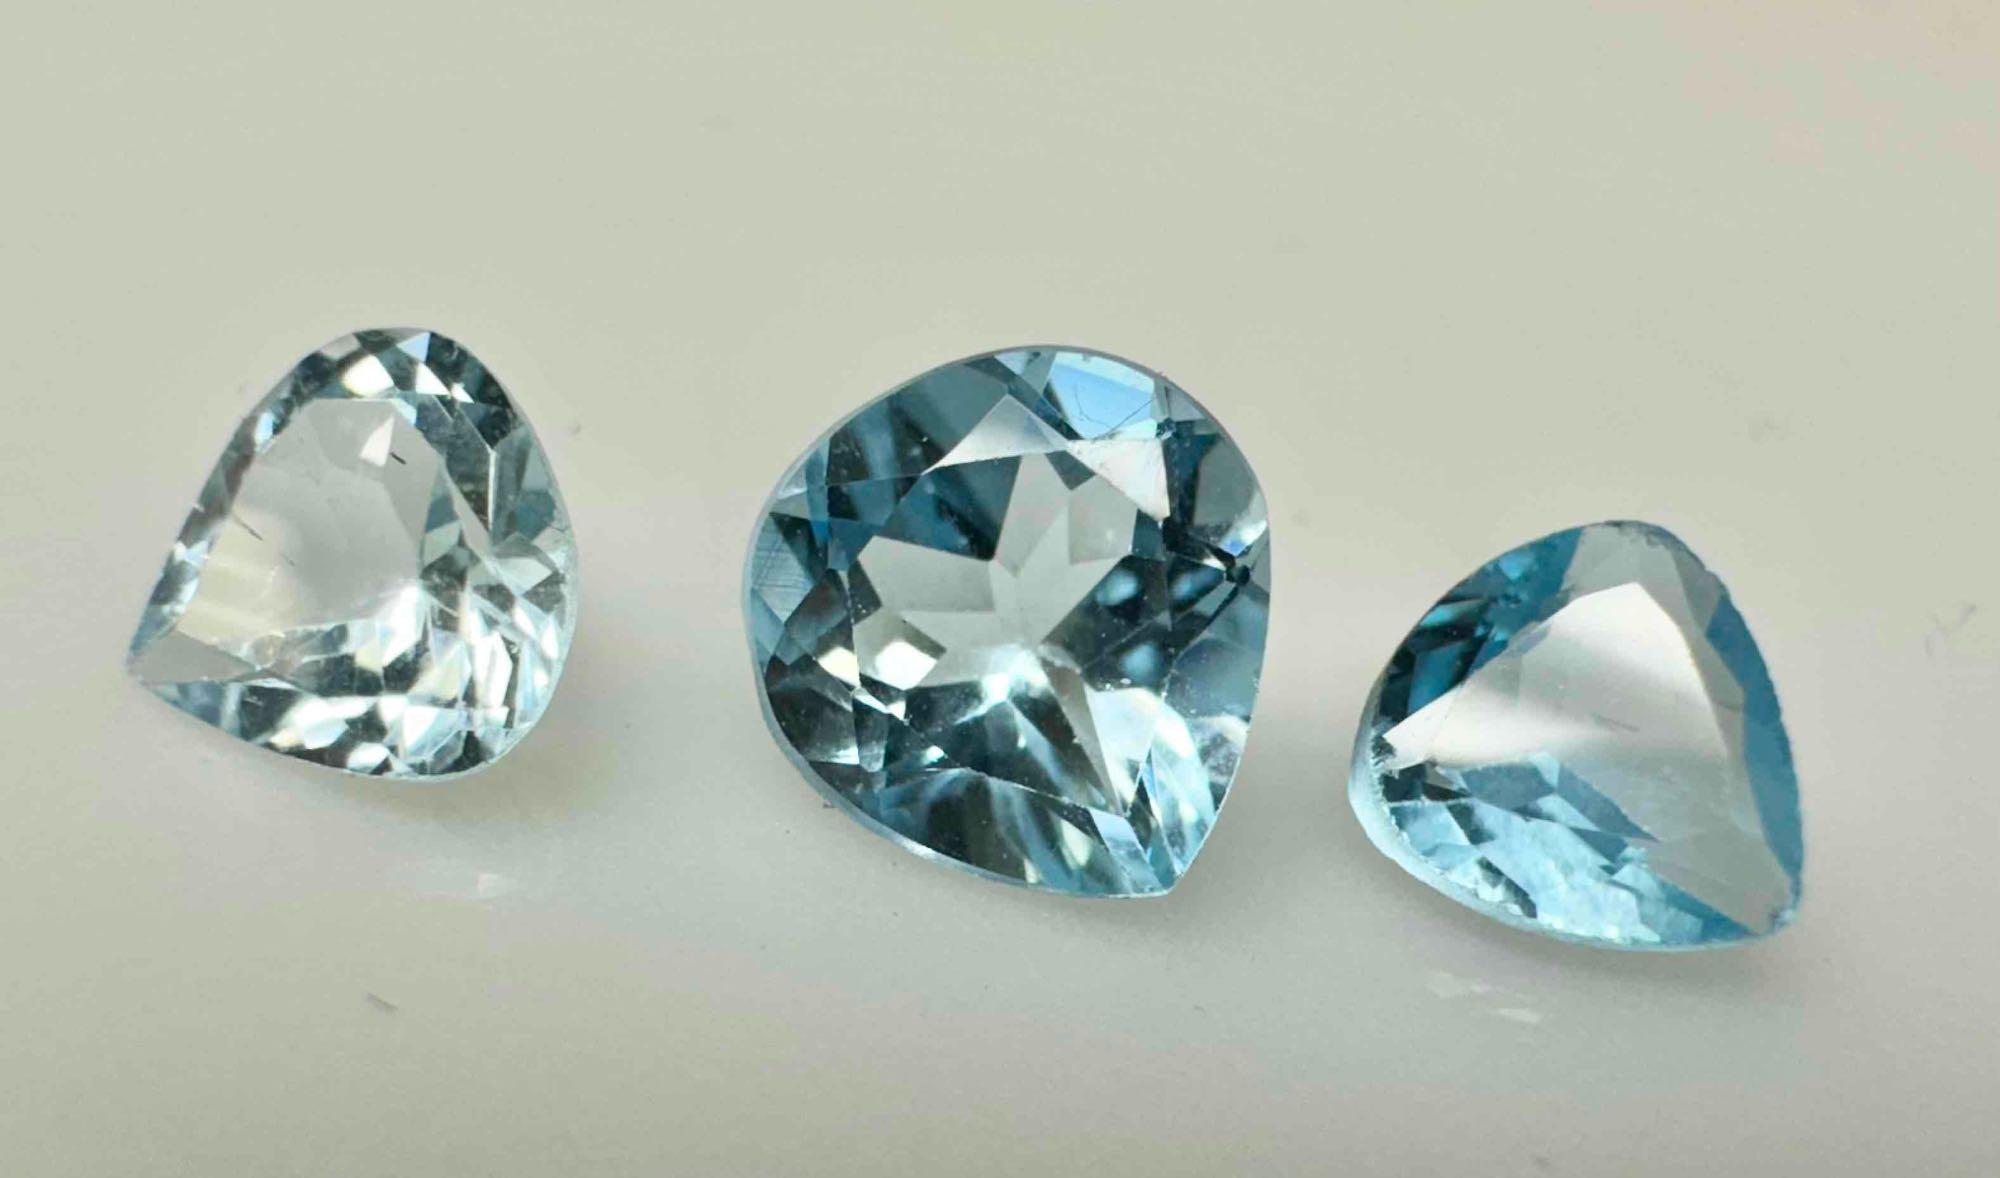 3 Trillion Cut Topaz Gemstones 3.2ct total